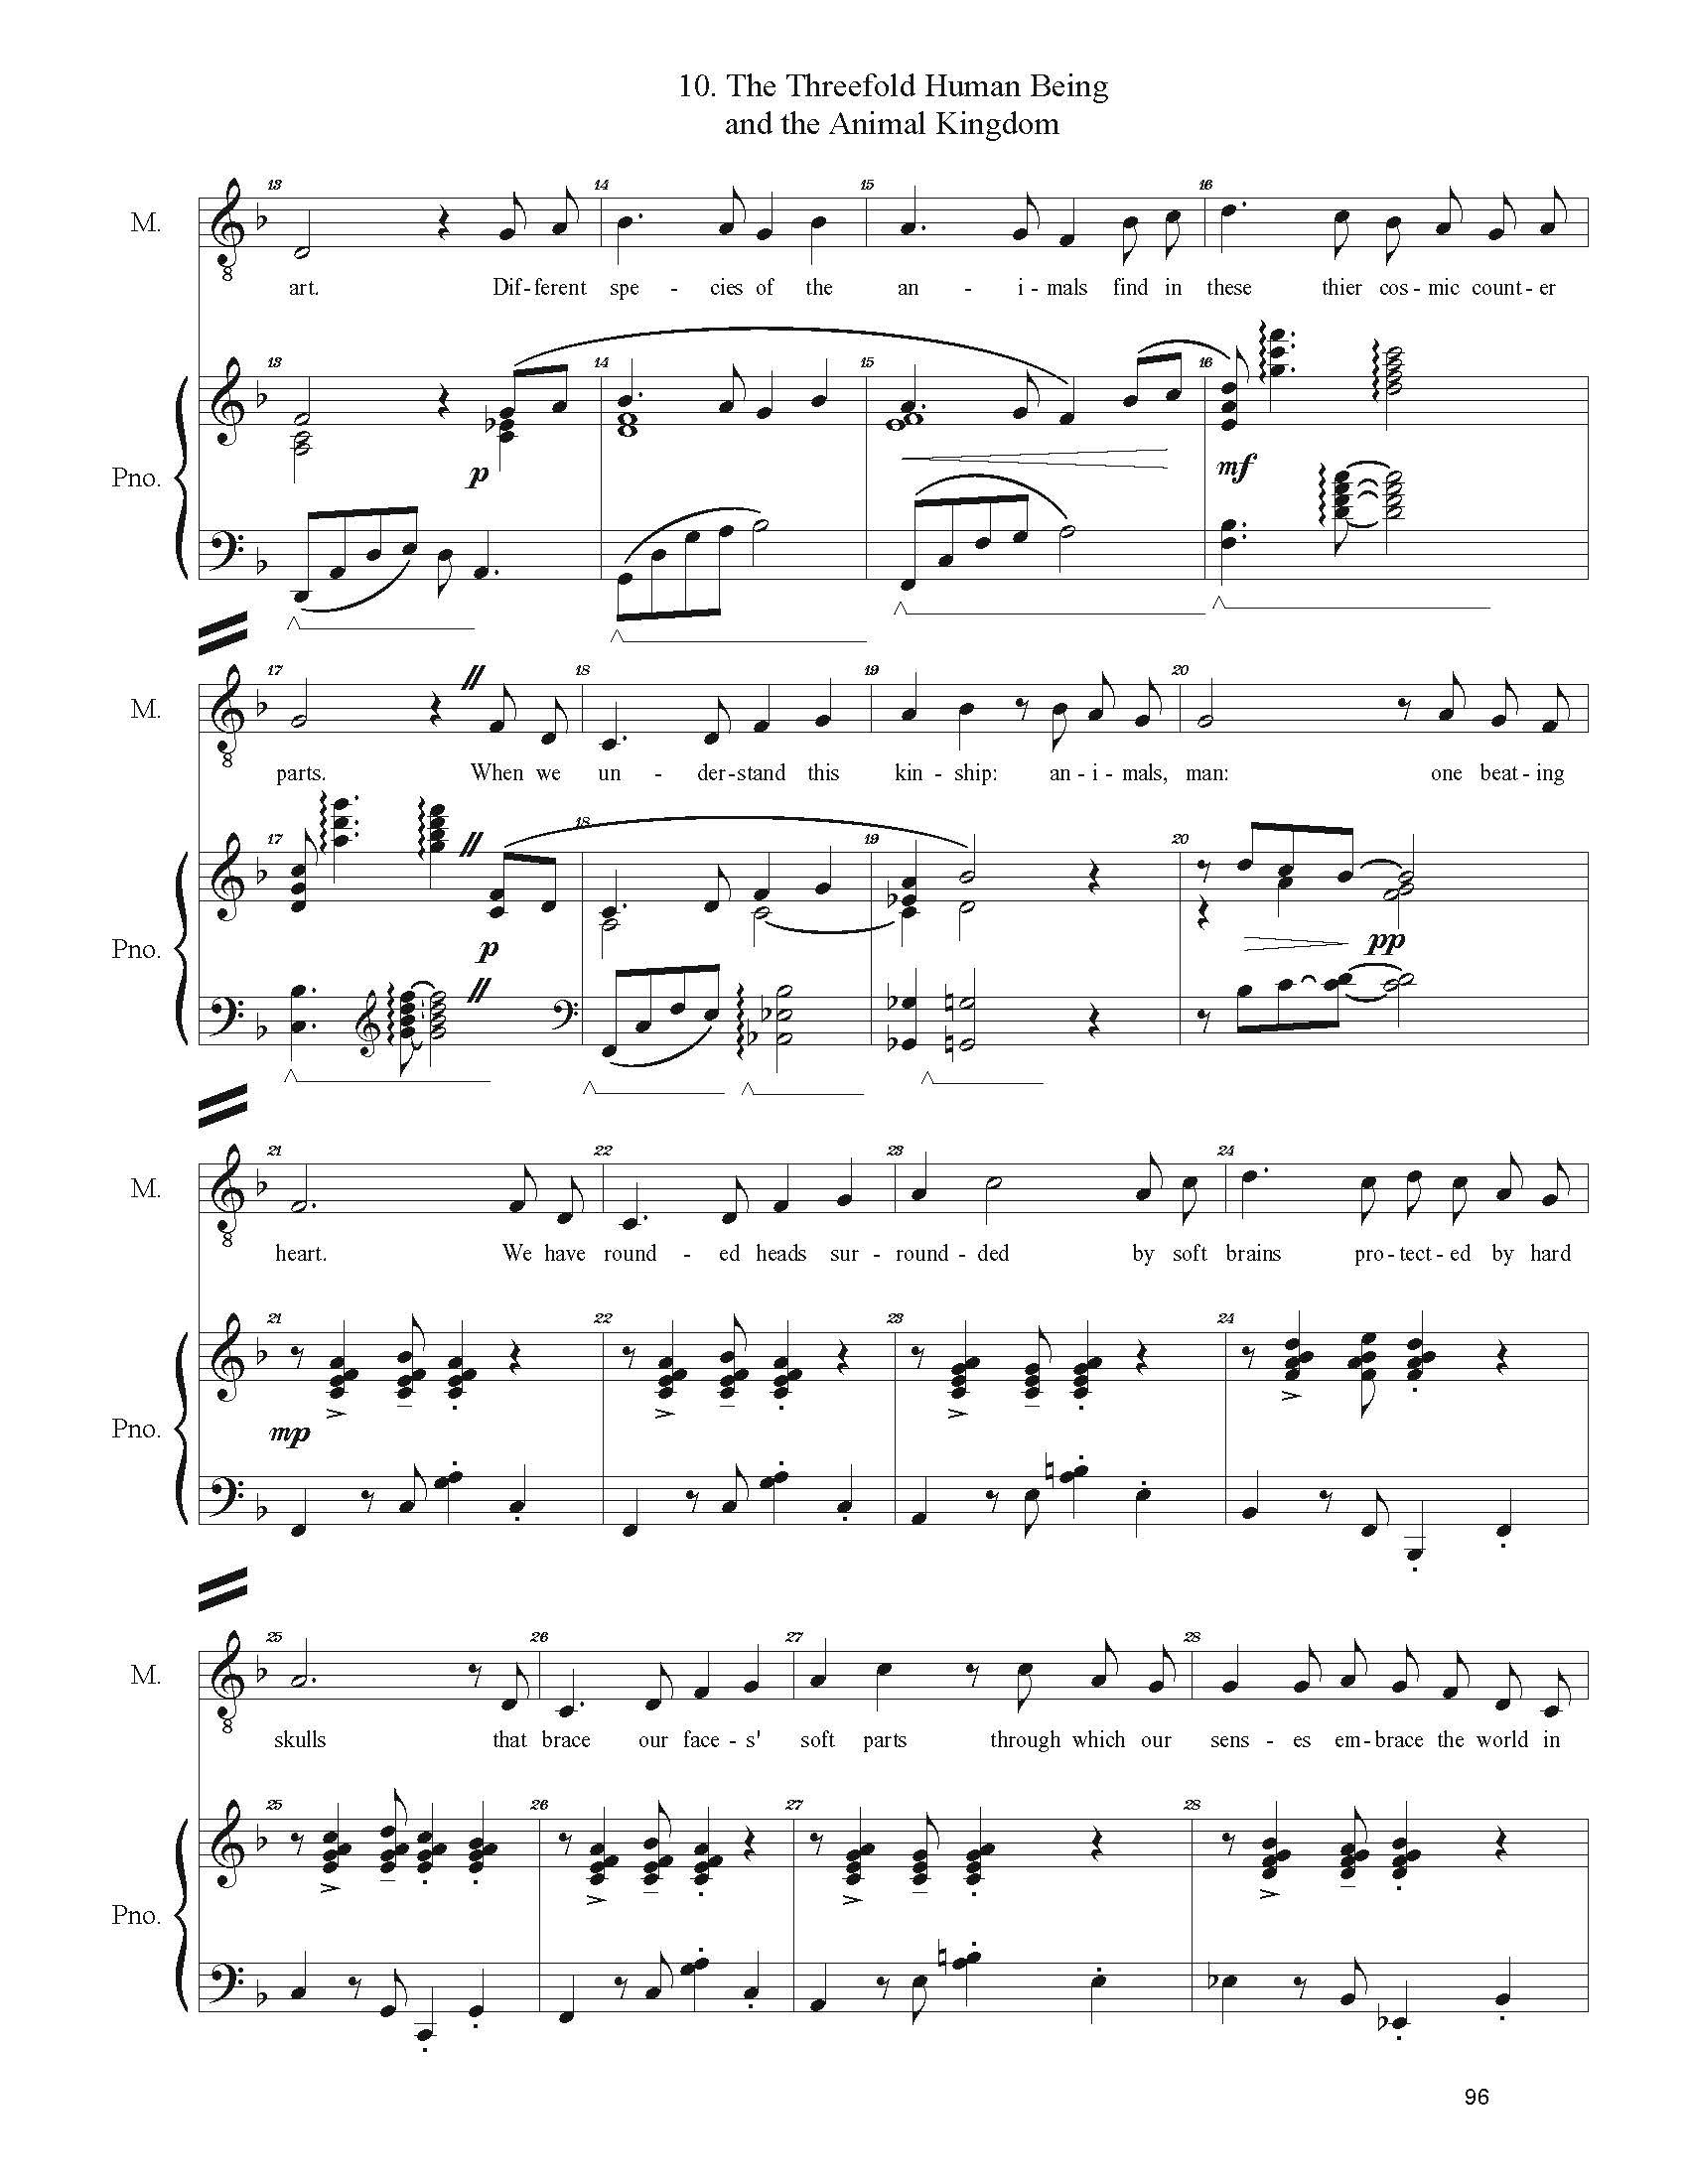 FULL PIANO VOCAL SCORE DRAFT 1 - Score_Page_096.jpg